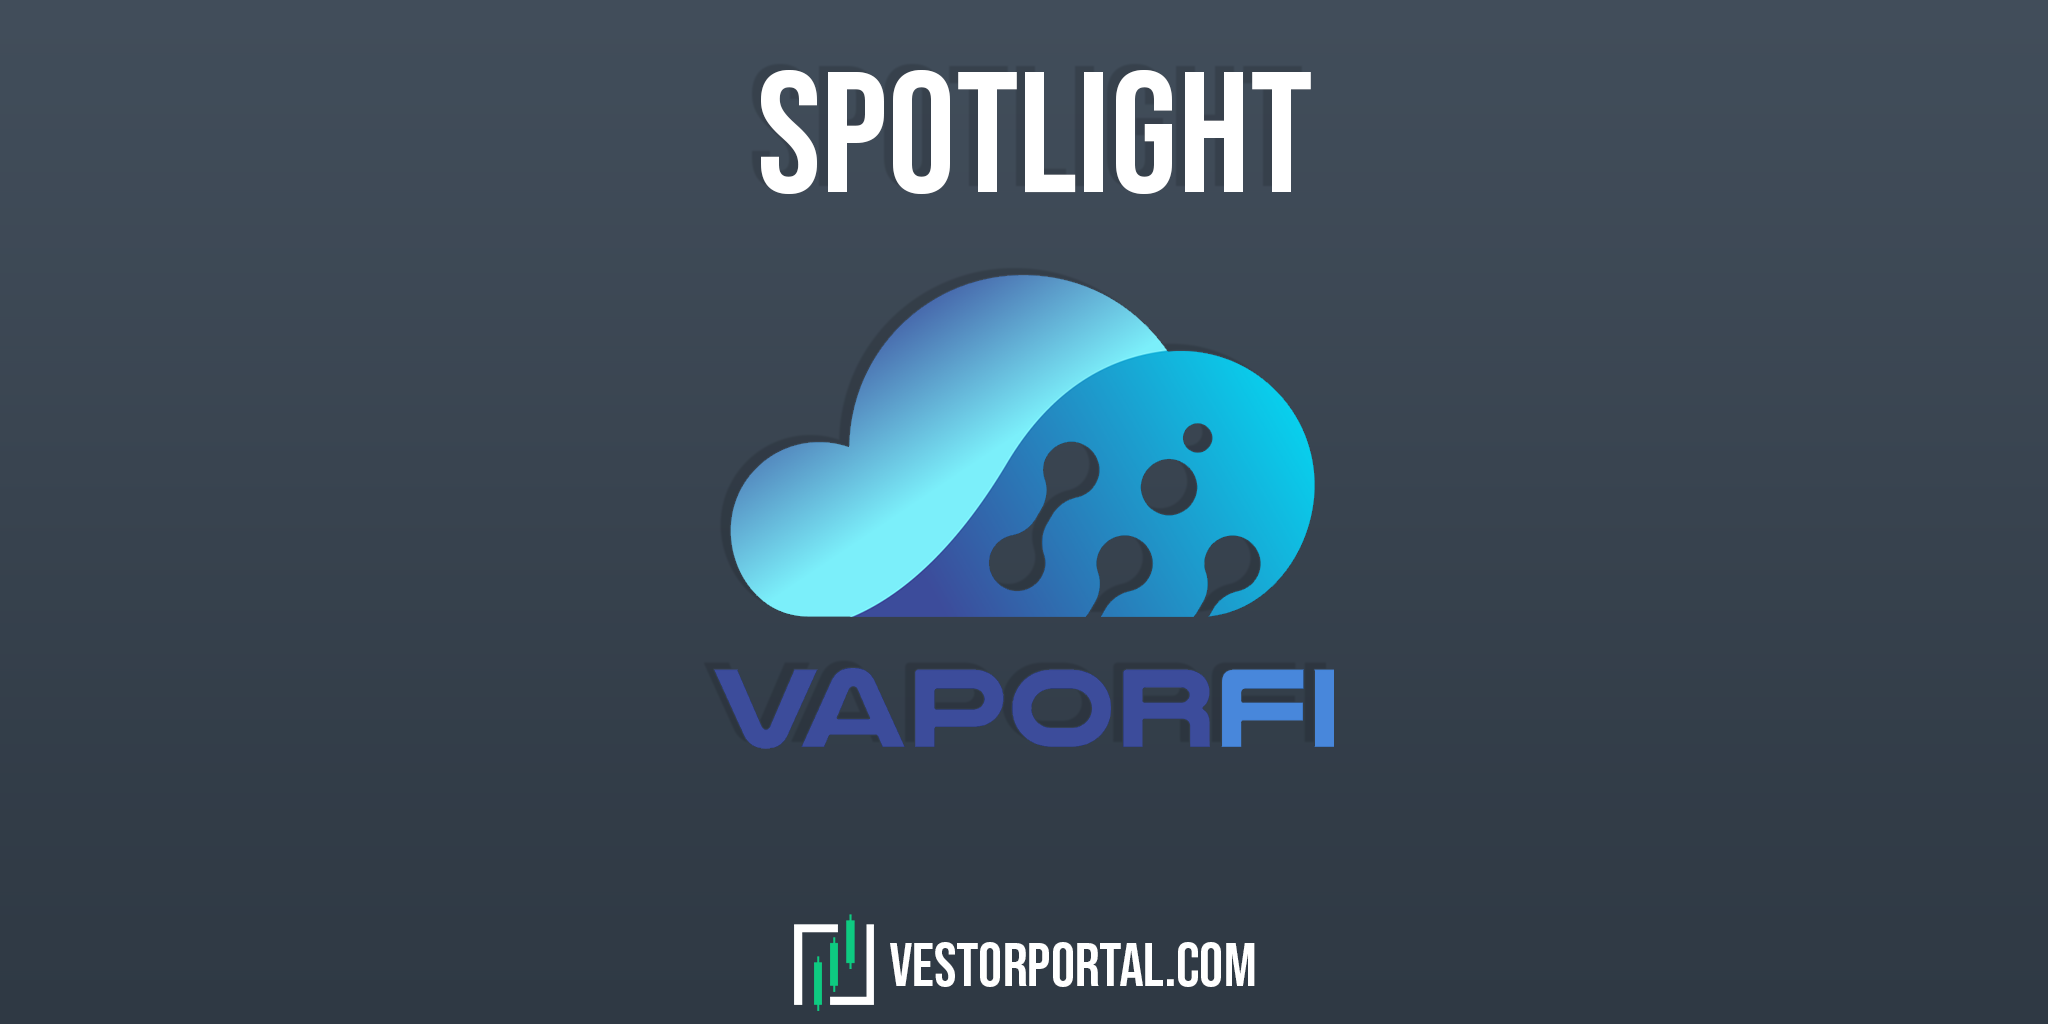 Meet VaporFi - Nodes for everyone!